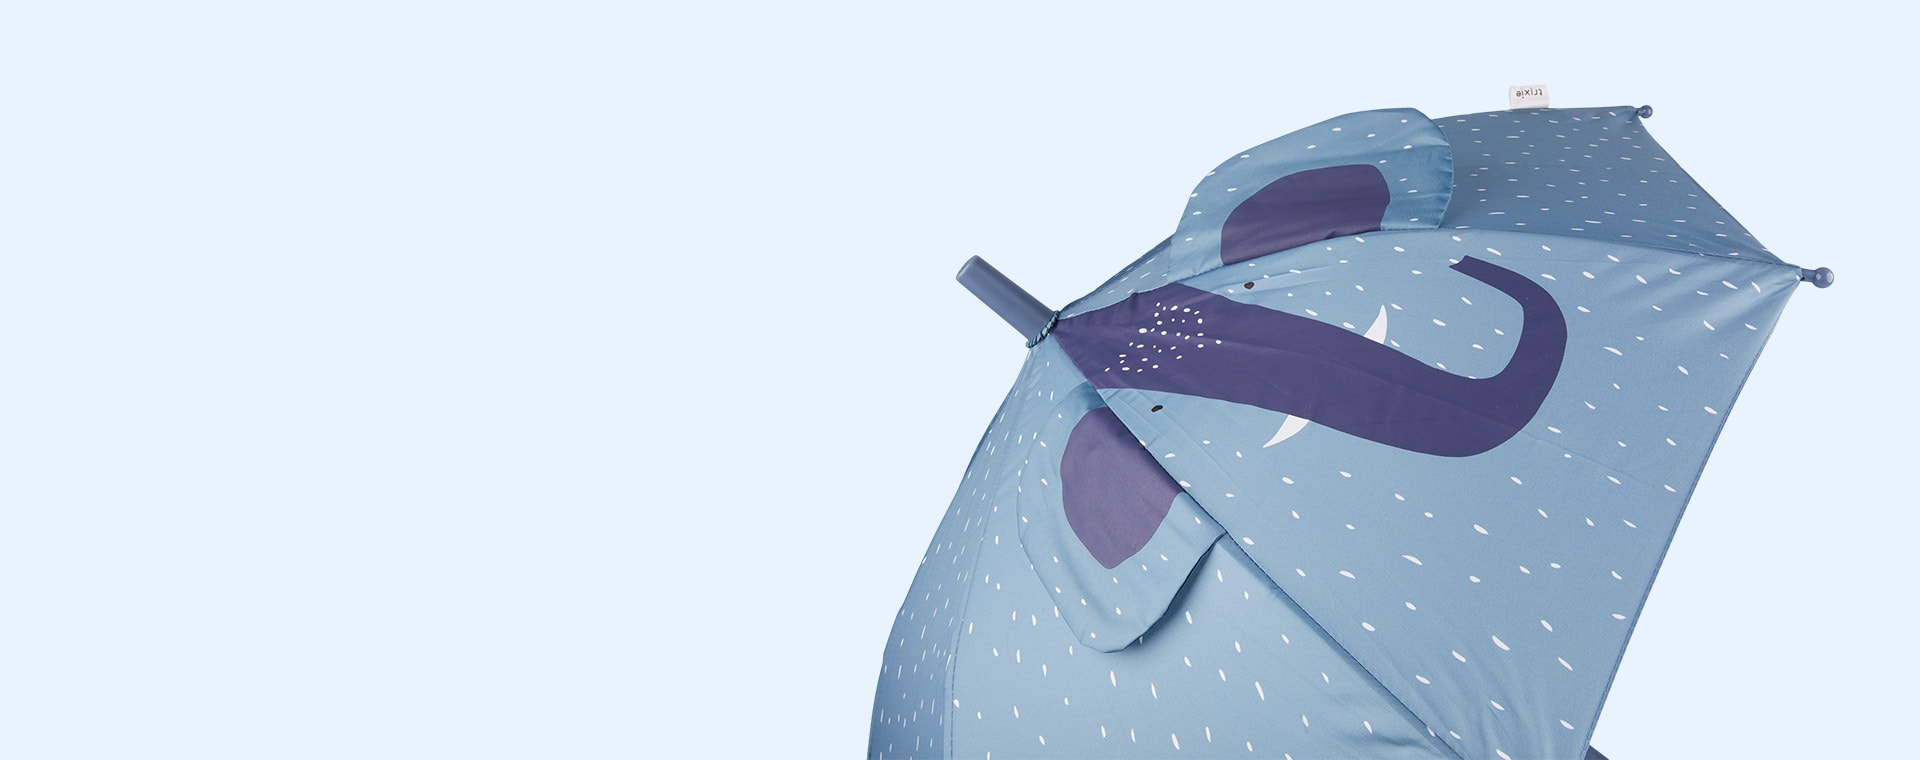 Mrs. Elephant Trixie Animal Umbrella